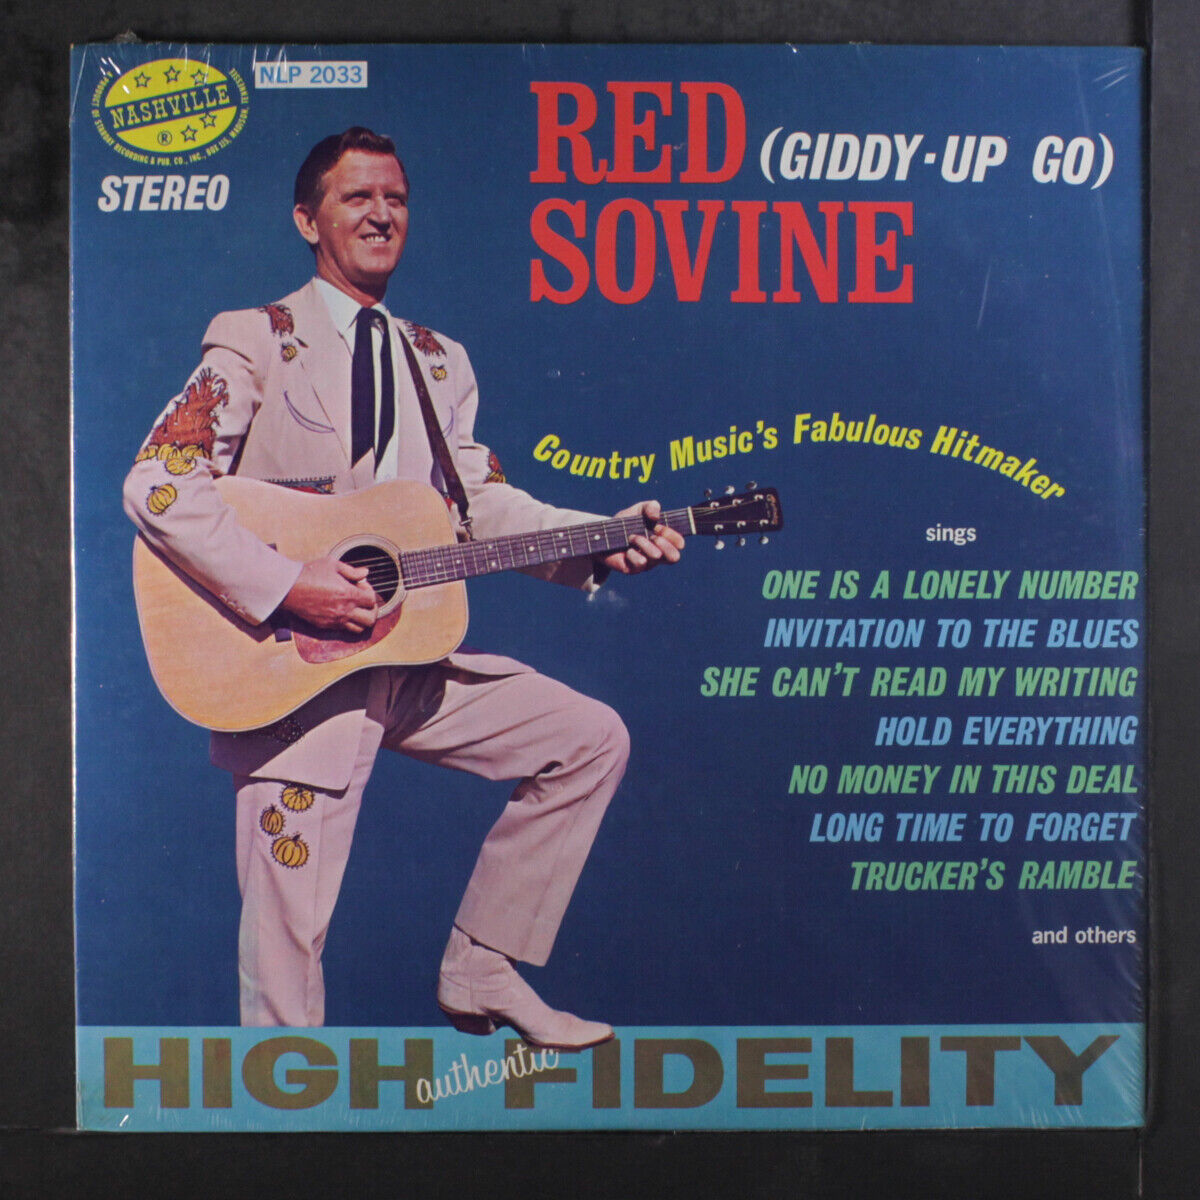 RED SOVINE: giddy-up go NASHVILLE 12\